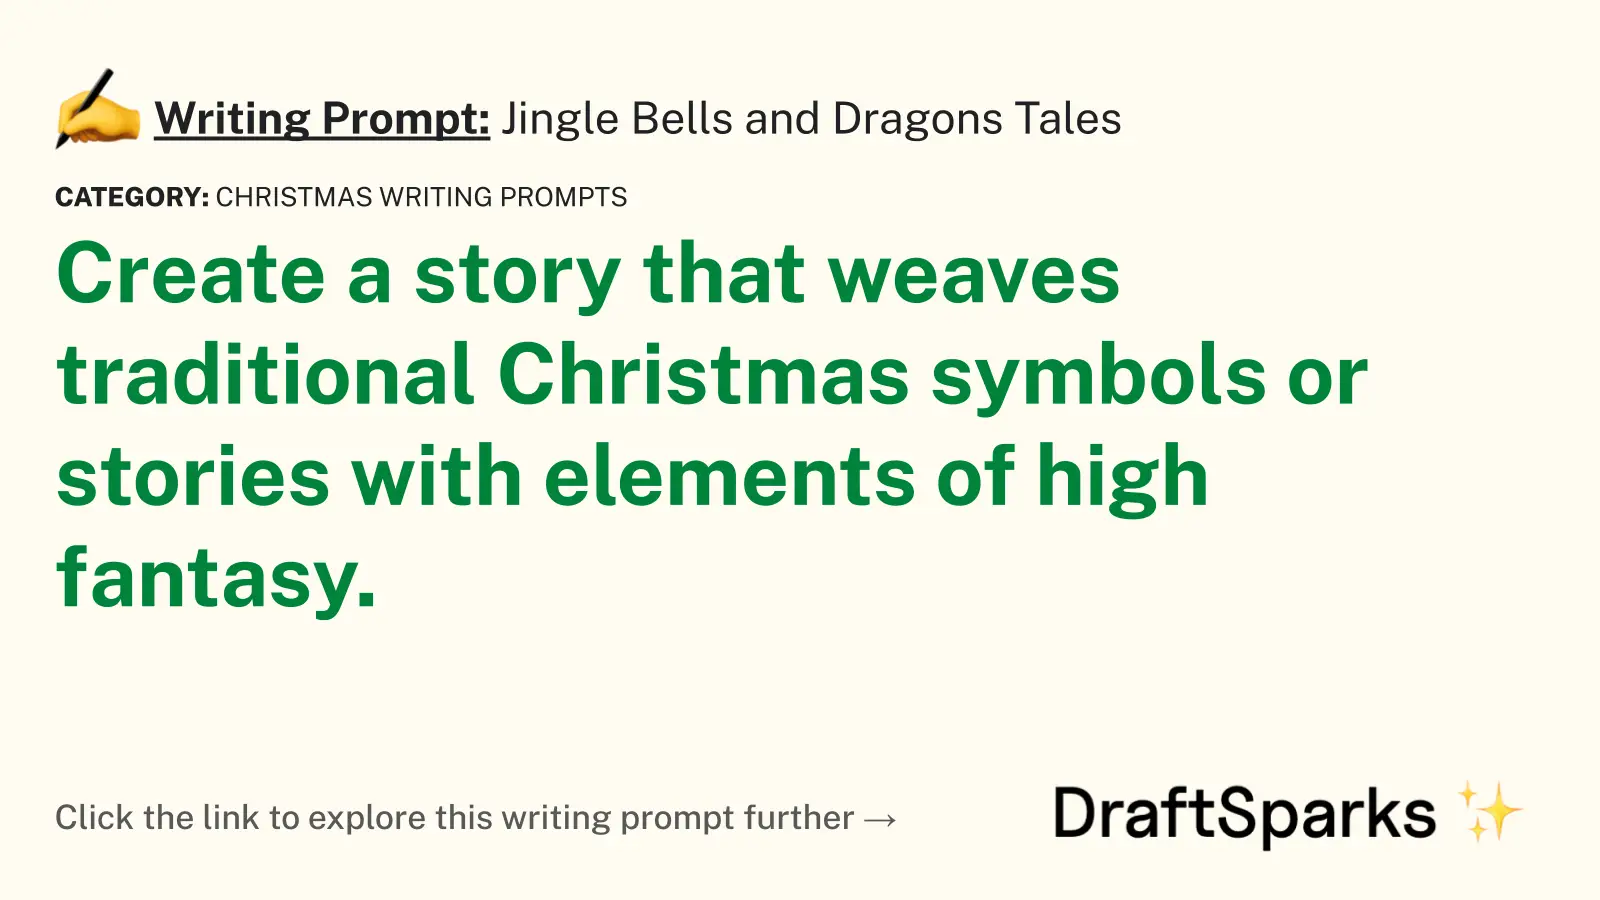 Jingle Bells and Dragons Tales